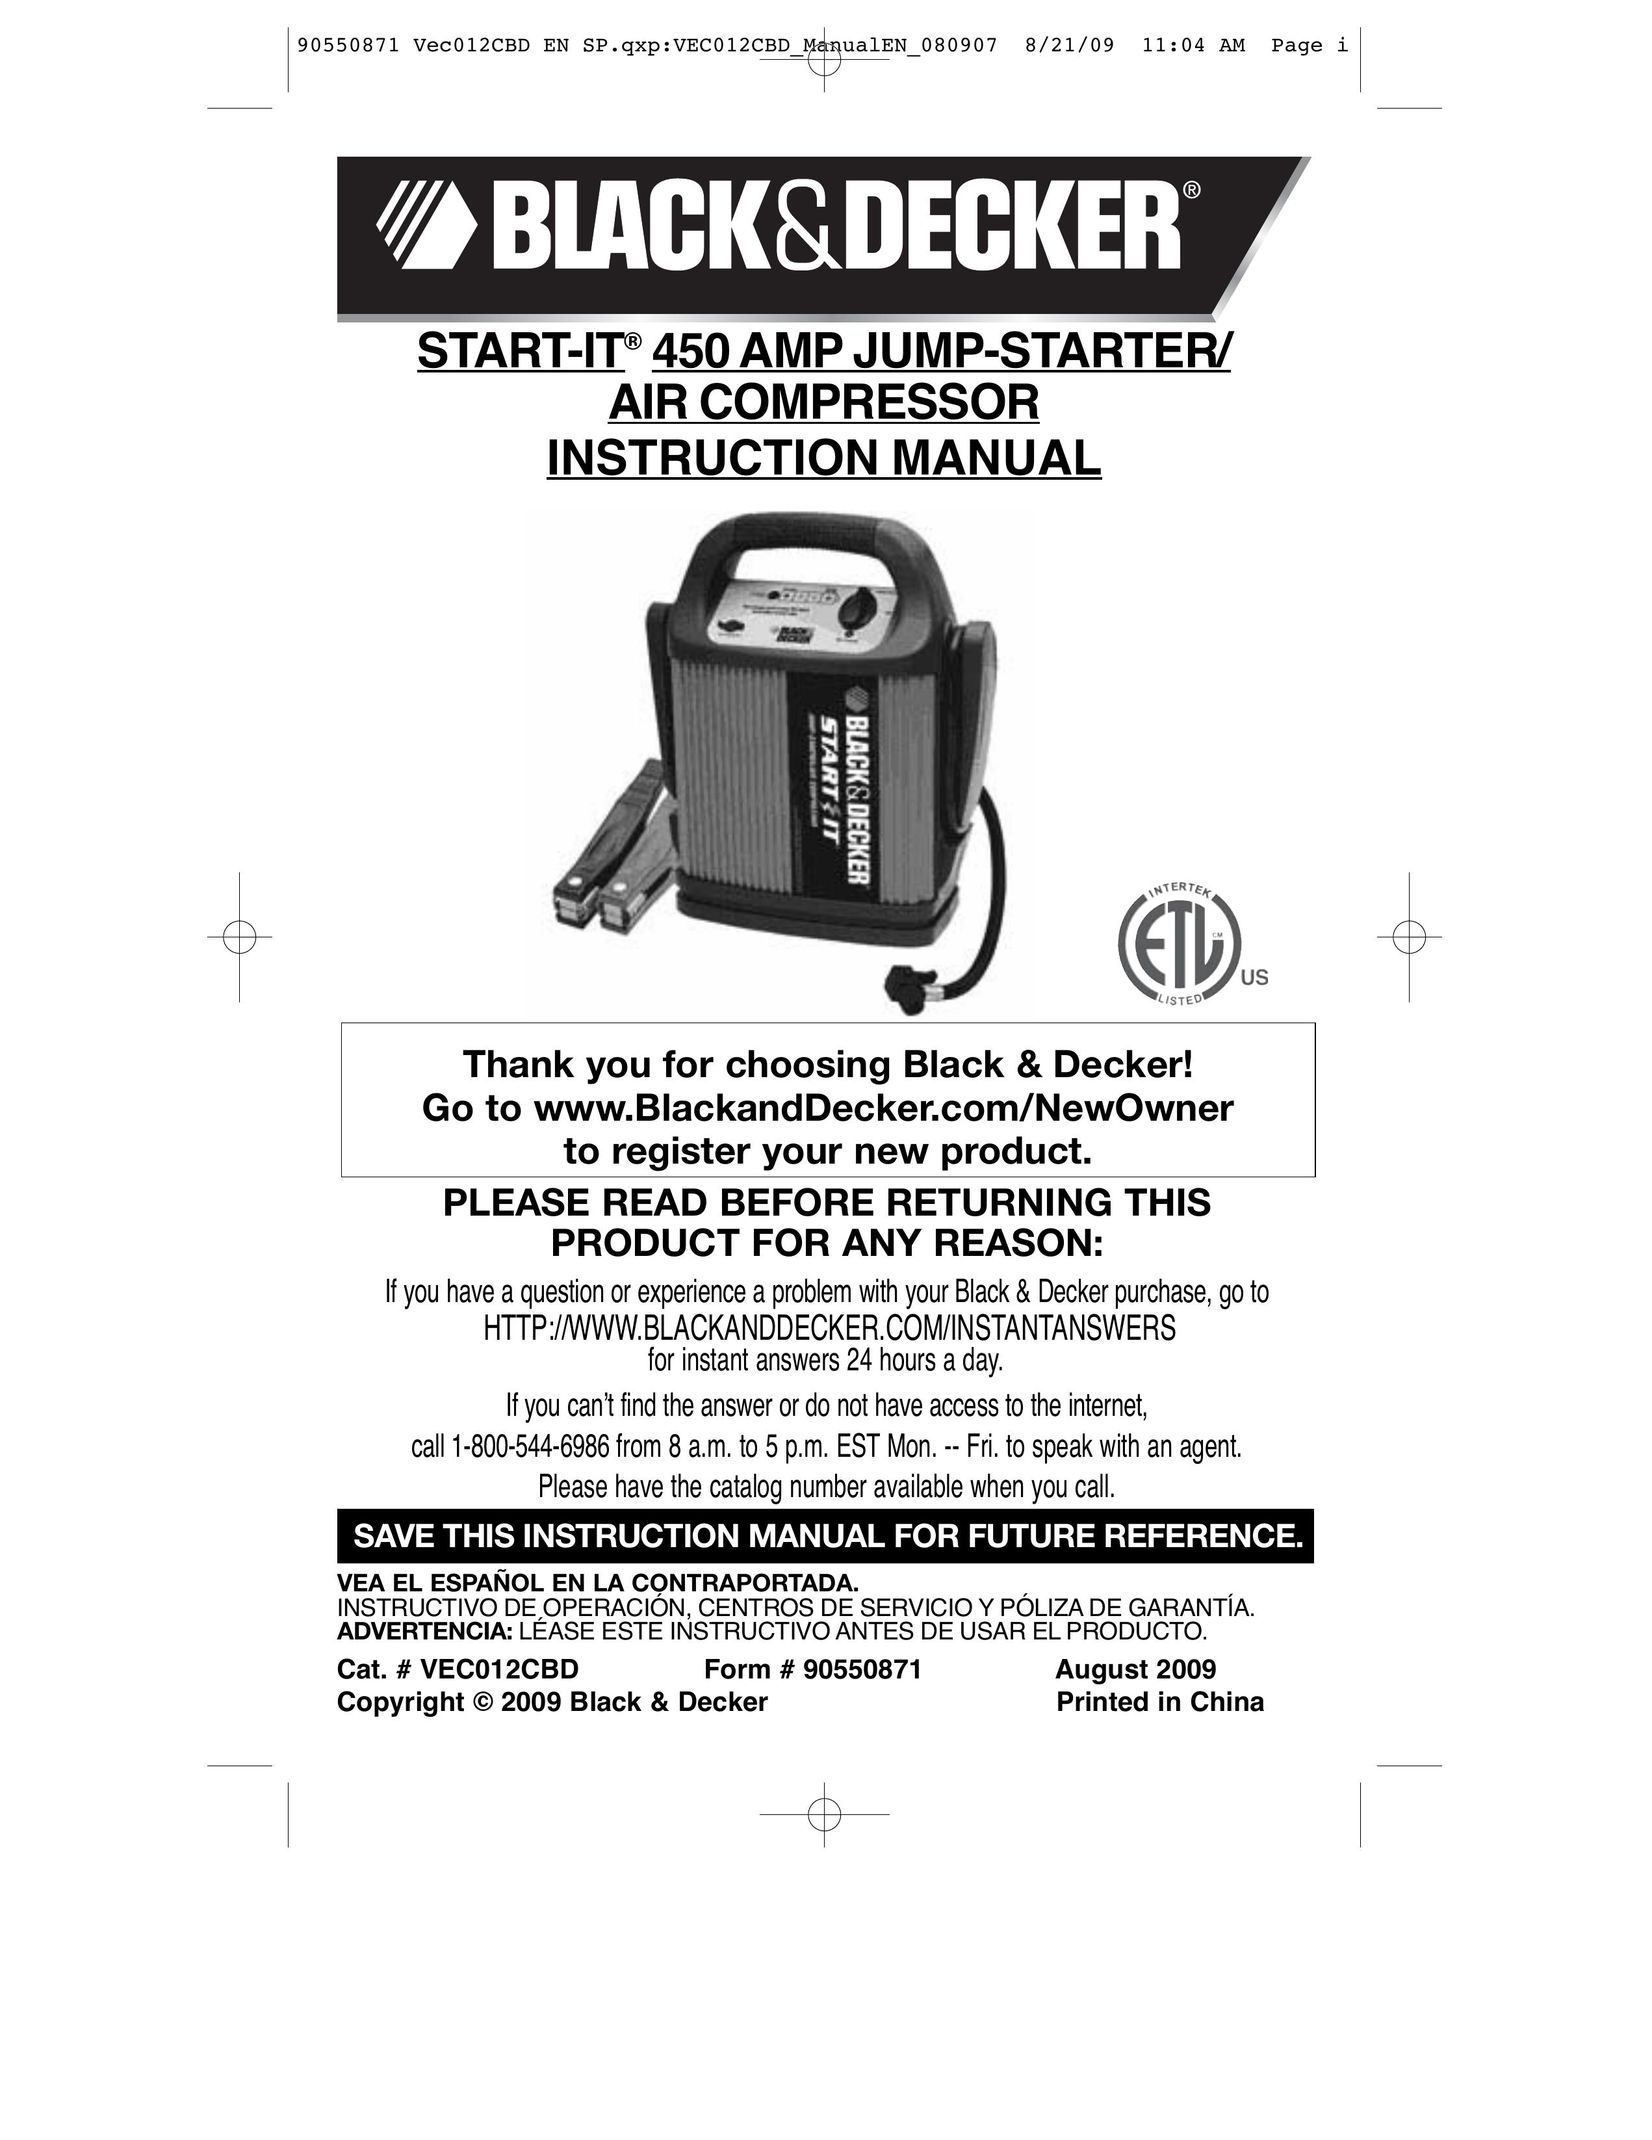 Black & Decker 90550871 Air Compressor User Manual